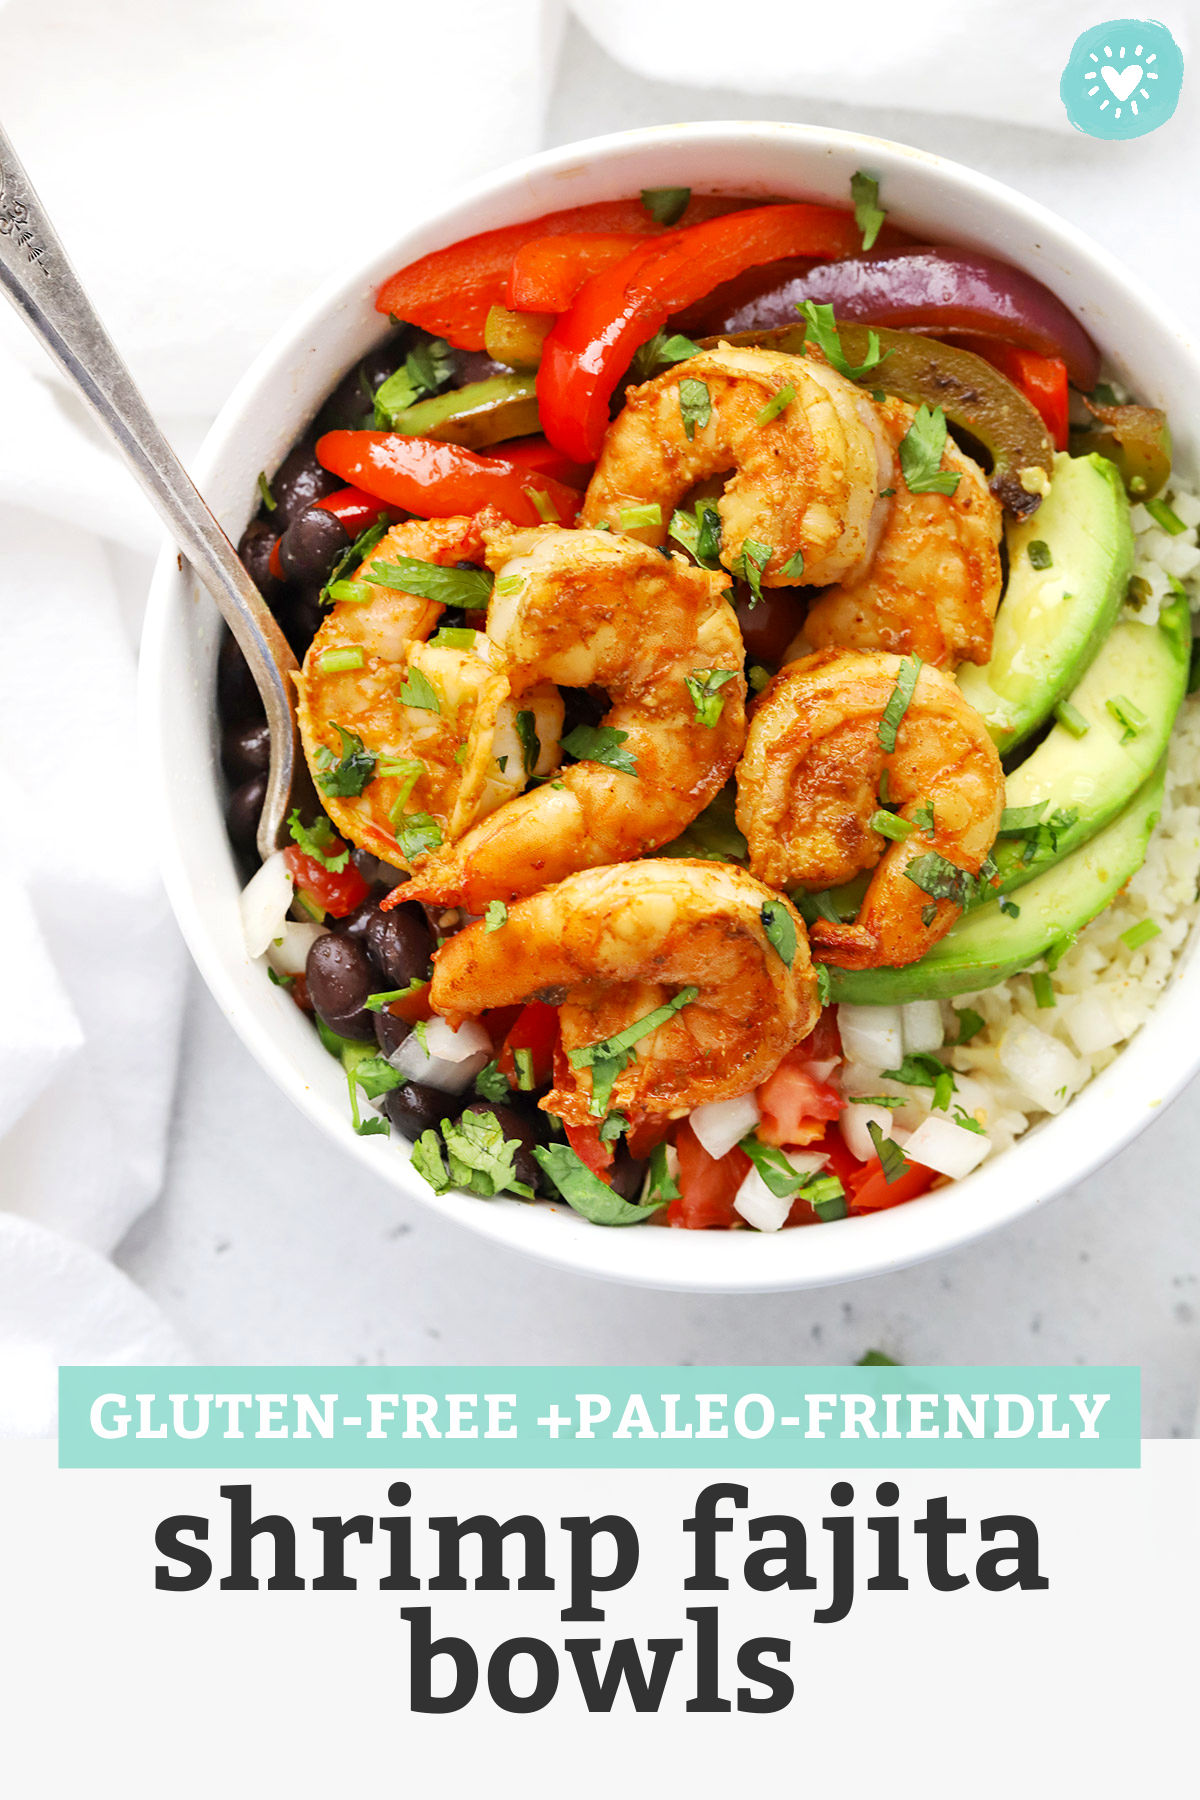 Gluten Free Shrimp Fajita Bowls with avocado, black beans, and pico de gallo with text overlay that reads "Gluten-Free + Paleo-Friendly Shrimp Fajita Bowls"